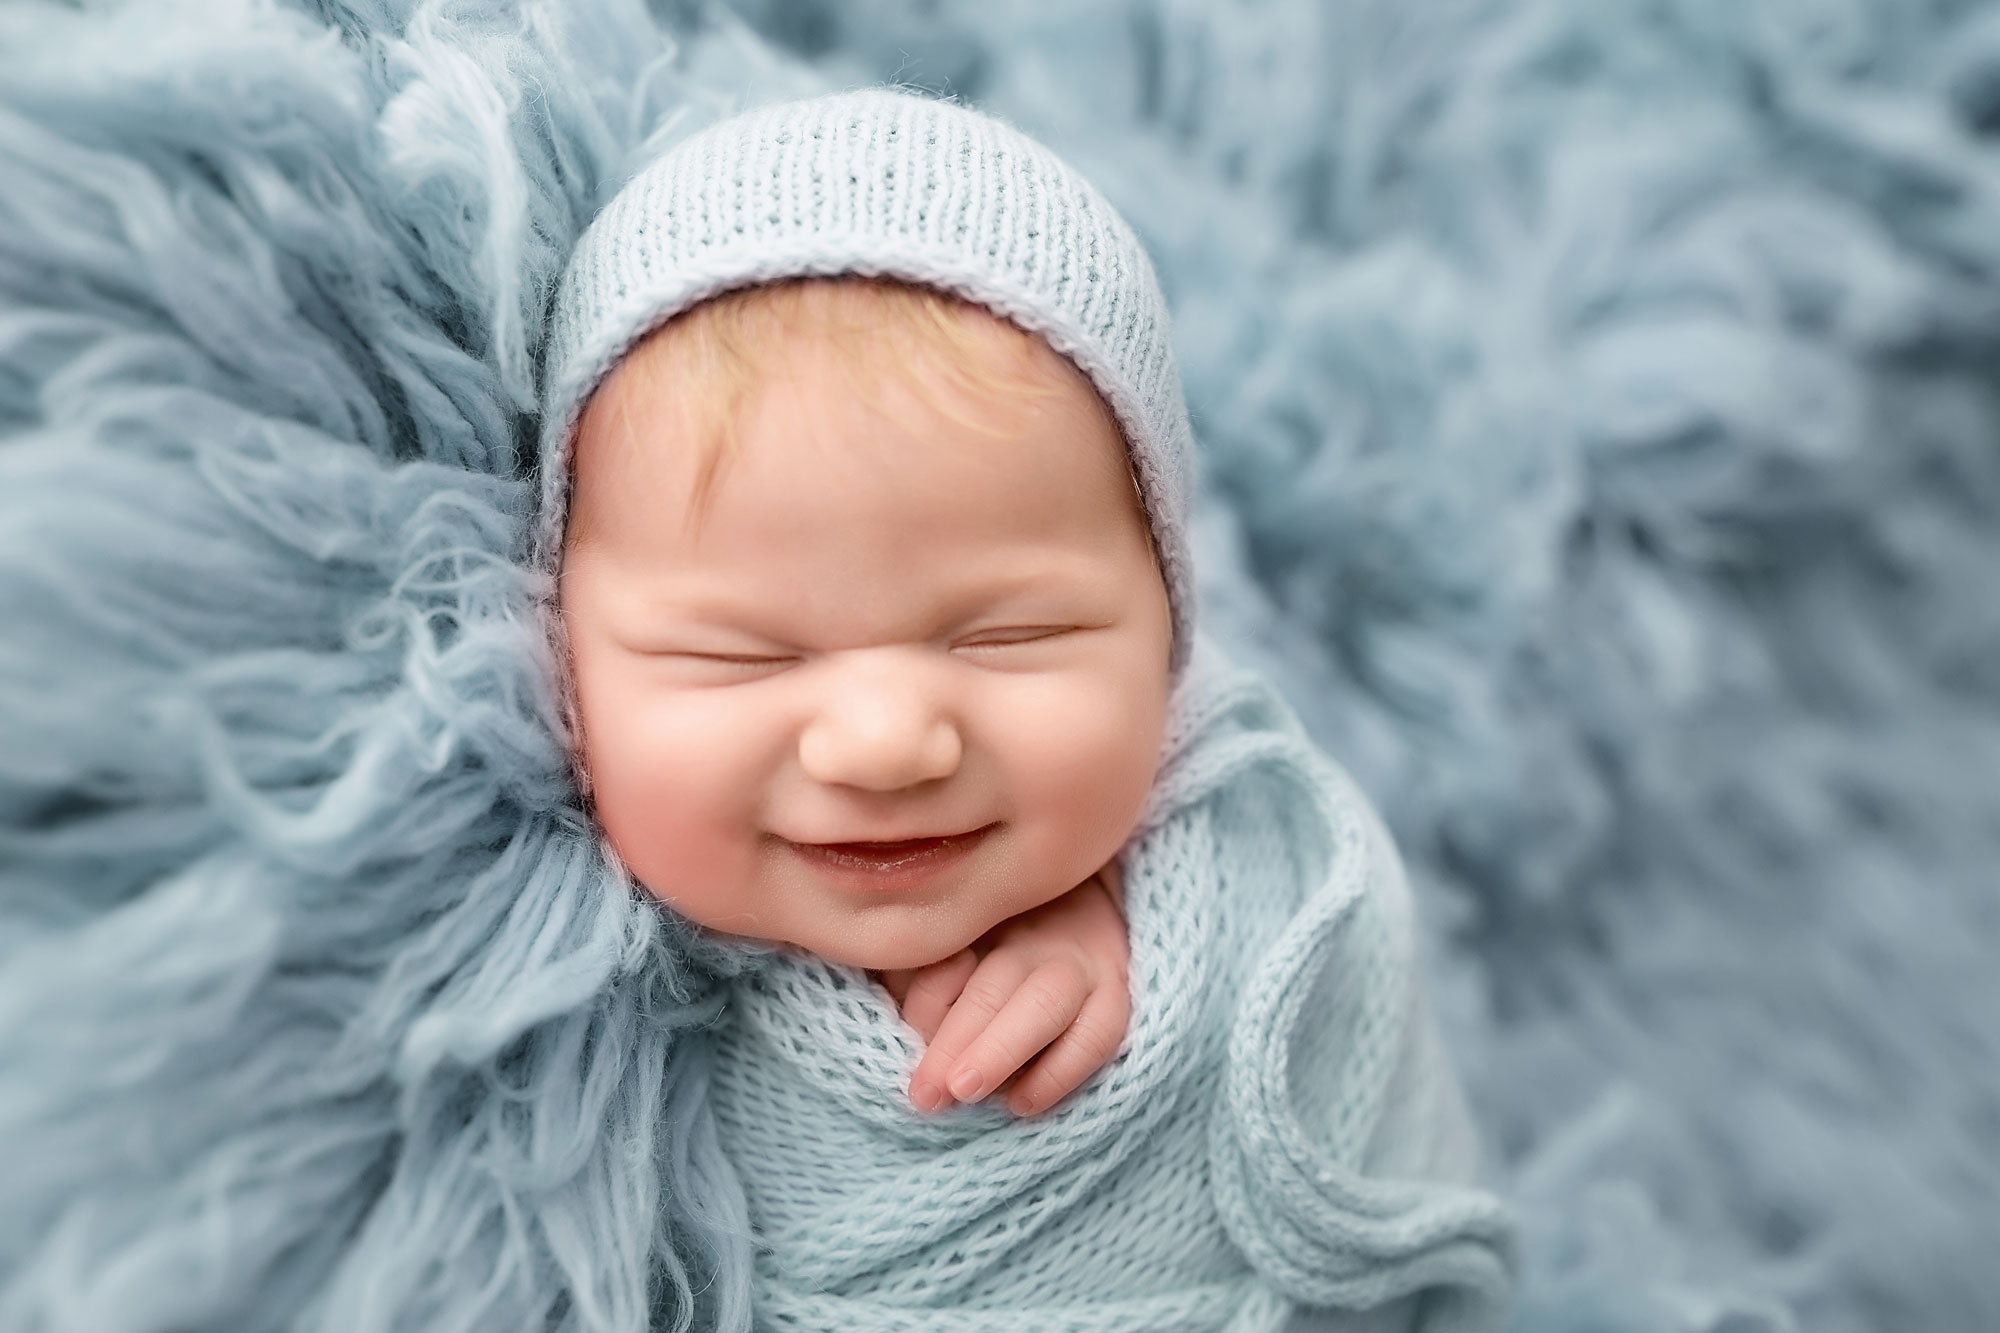 Smiling baby Photos